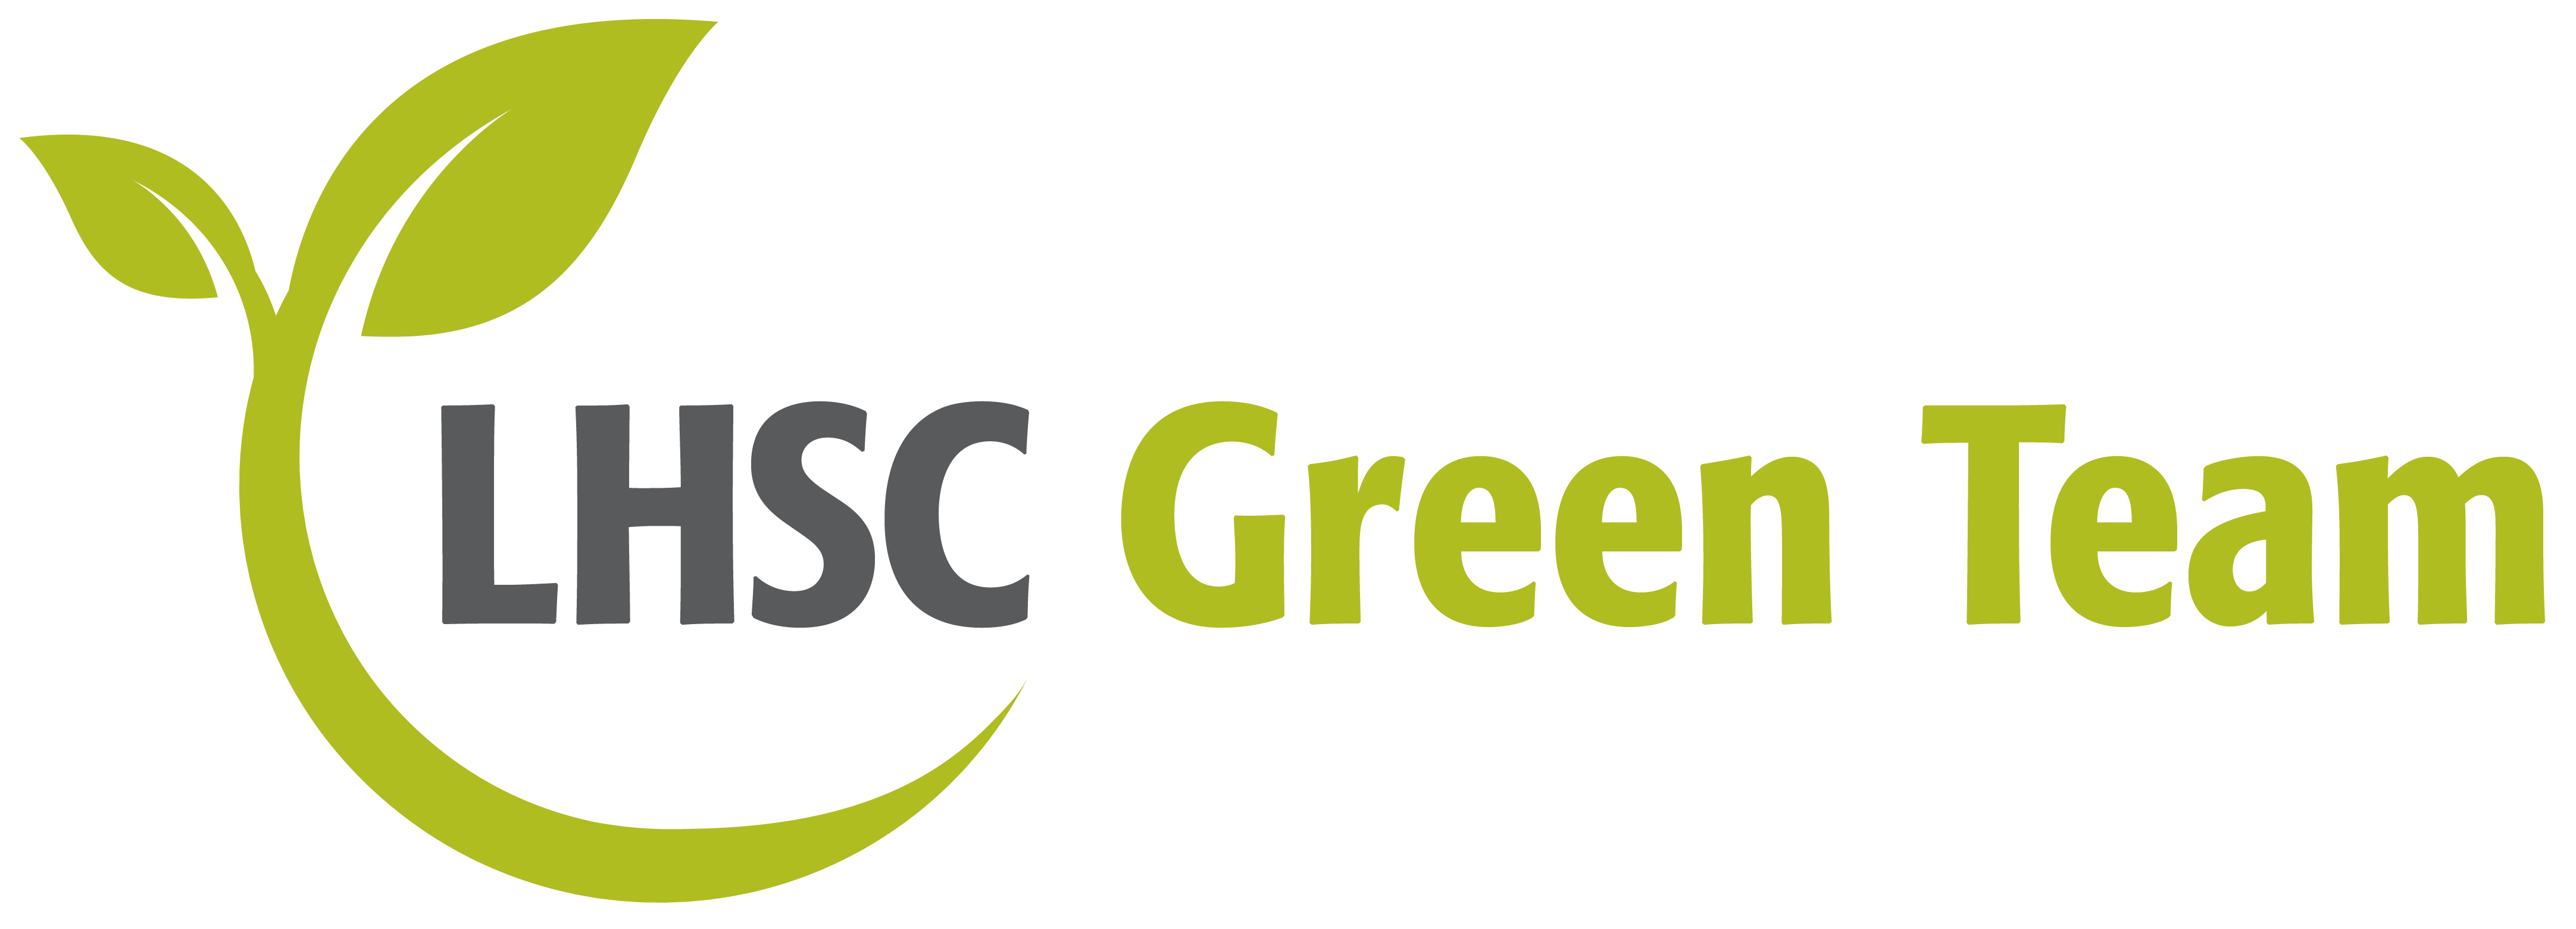 LHSC Green Team Logo with a leaf